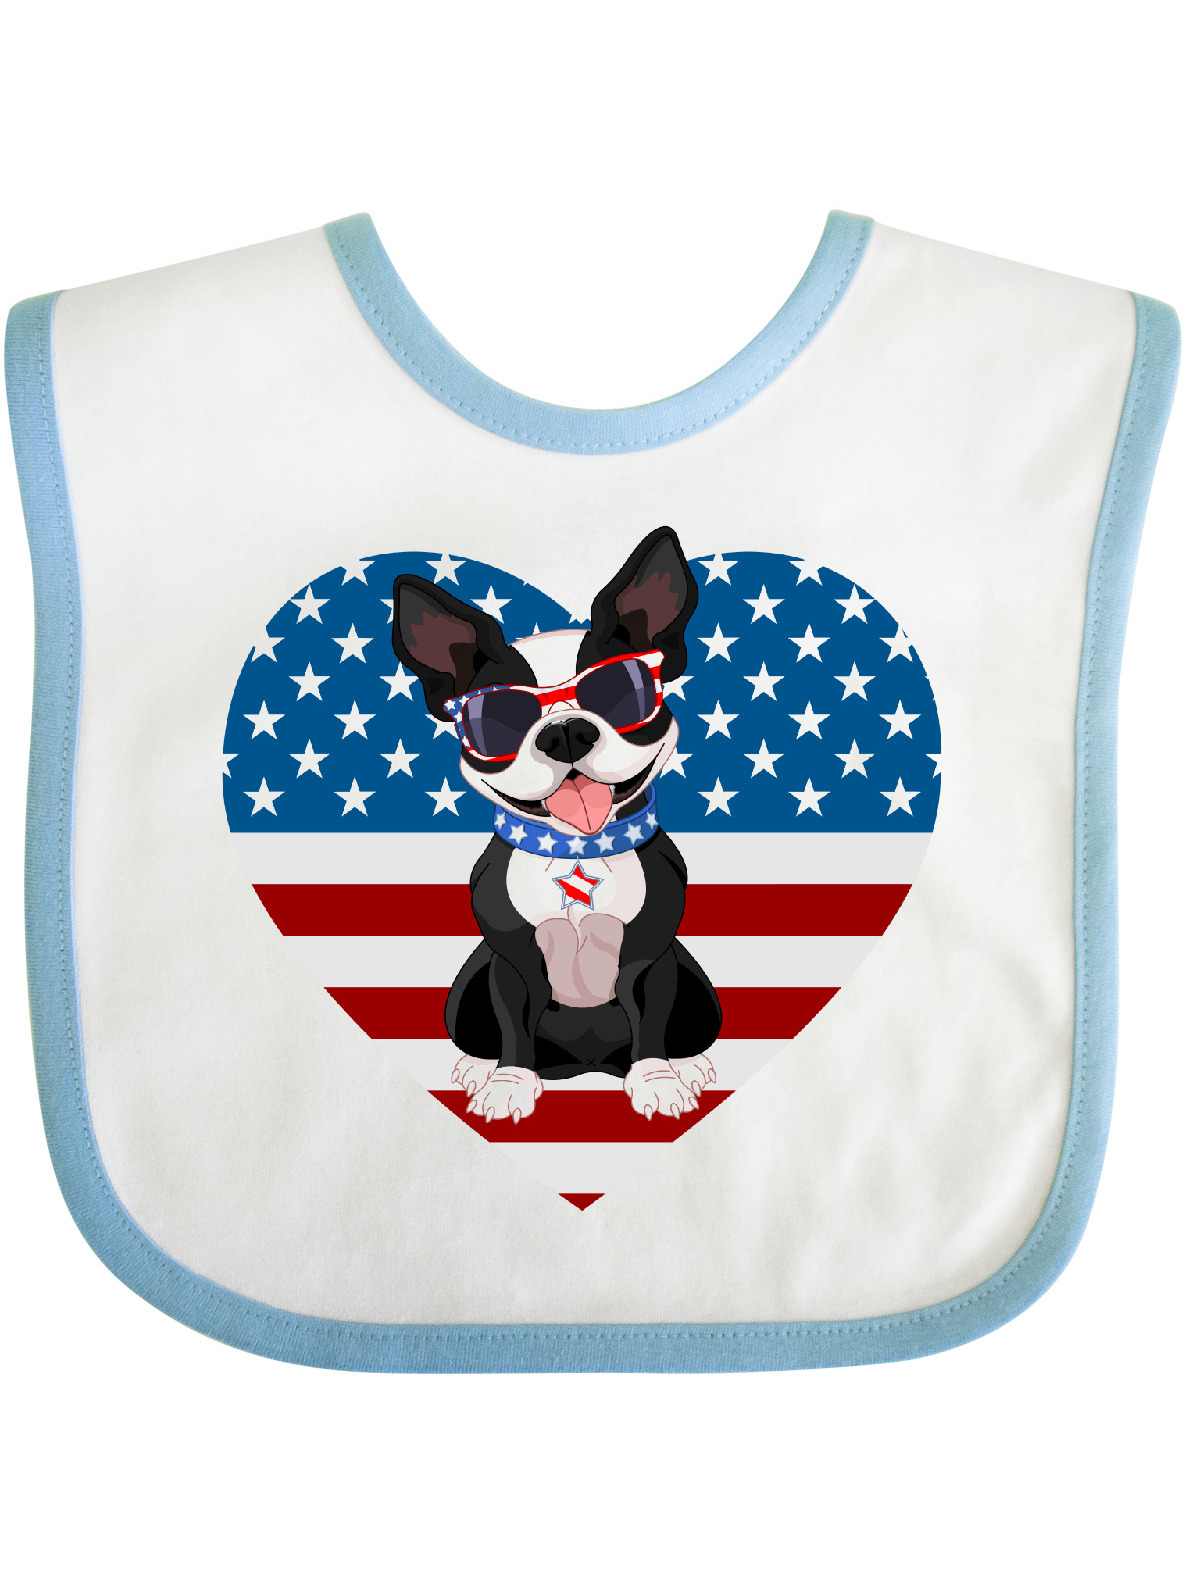 Inktastic Boston Terrier Dog US Flag July 4th Boys or Girls Baby Bib - image 1 of 3